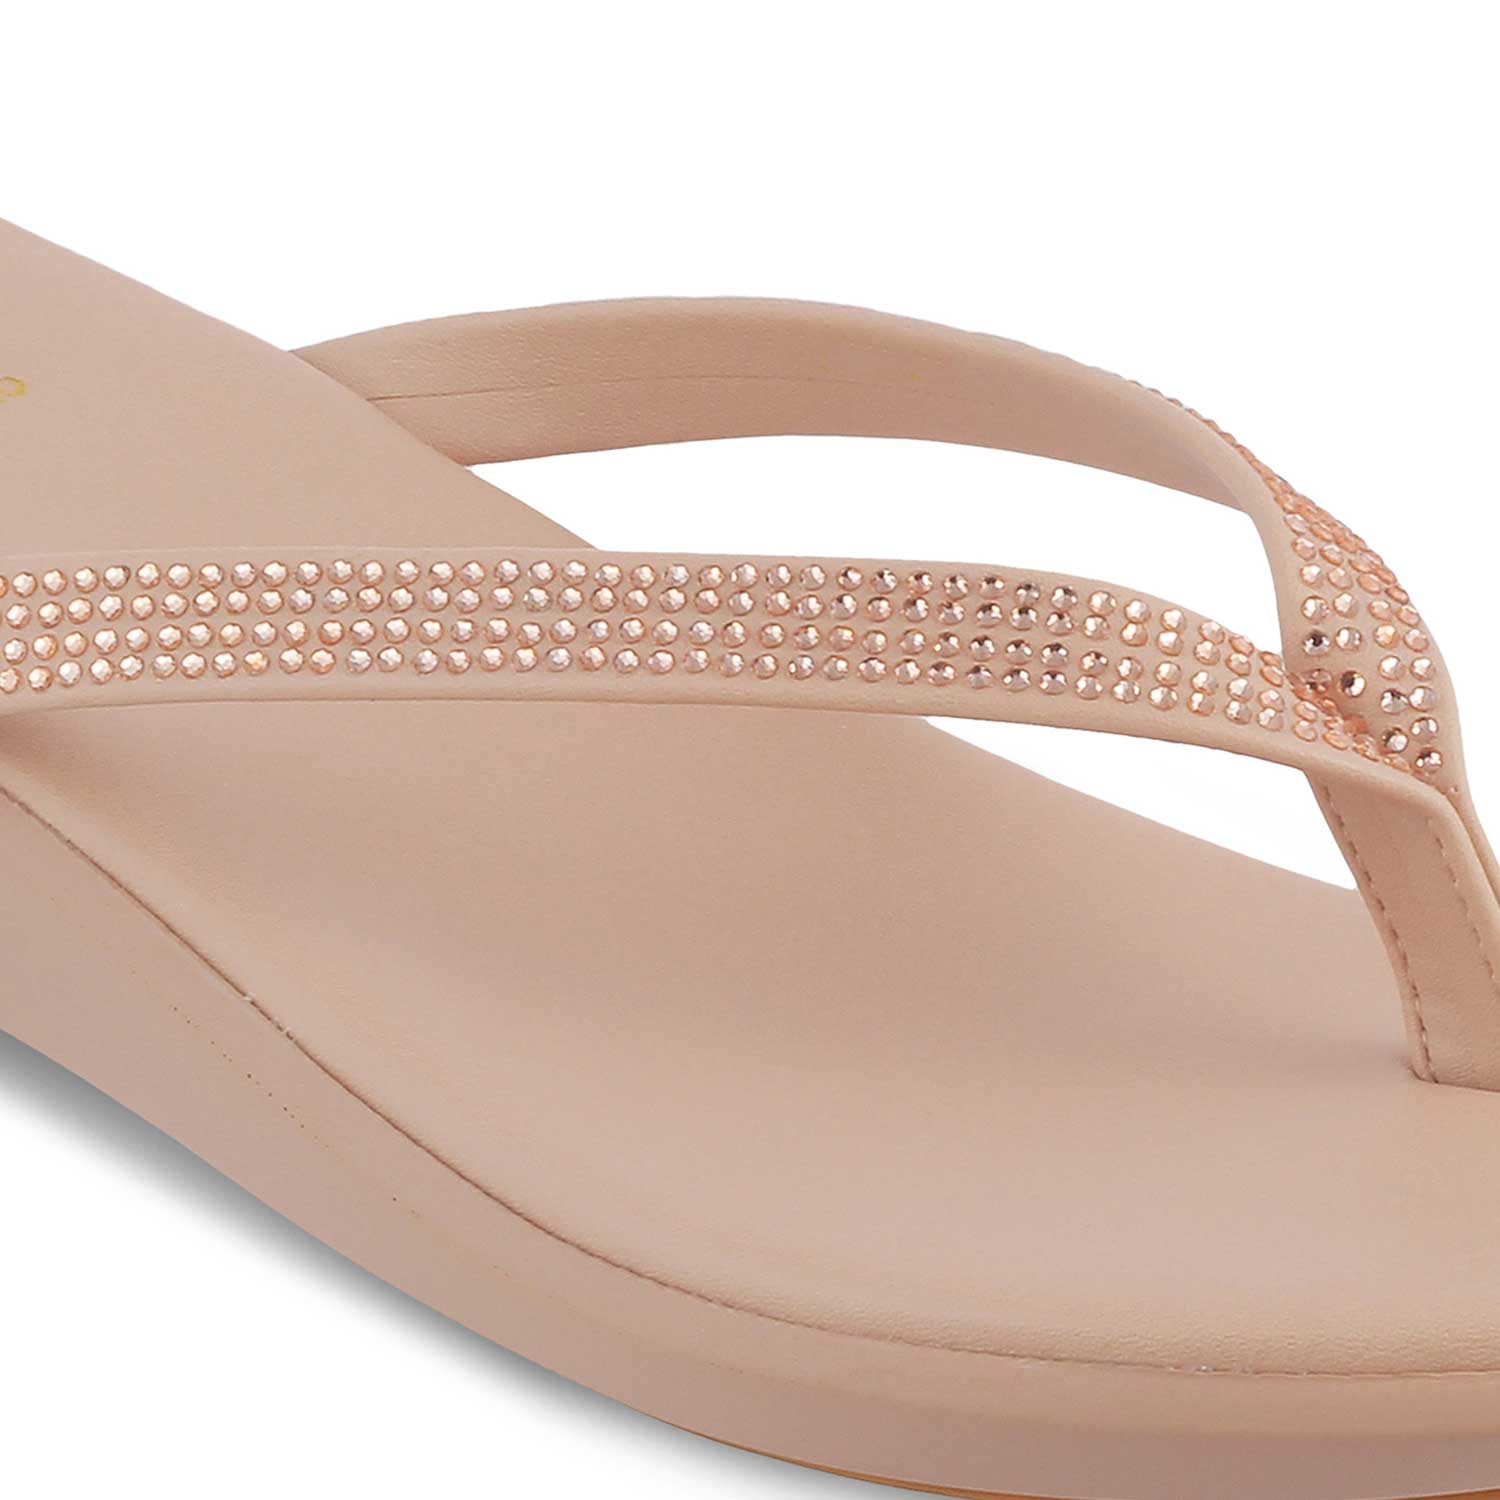 Tresmode-The Victoria Pink Women's Casual Wedge Sandals Tresmode-Tresmode